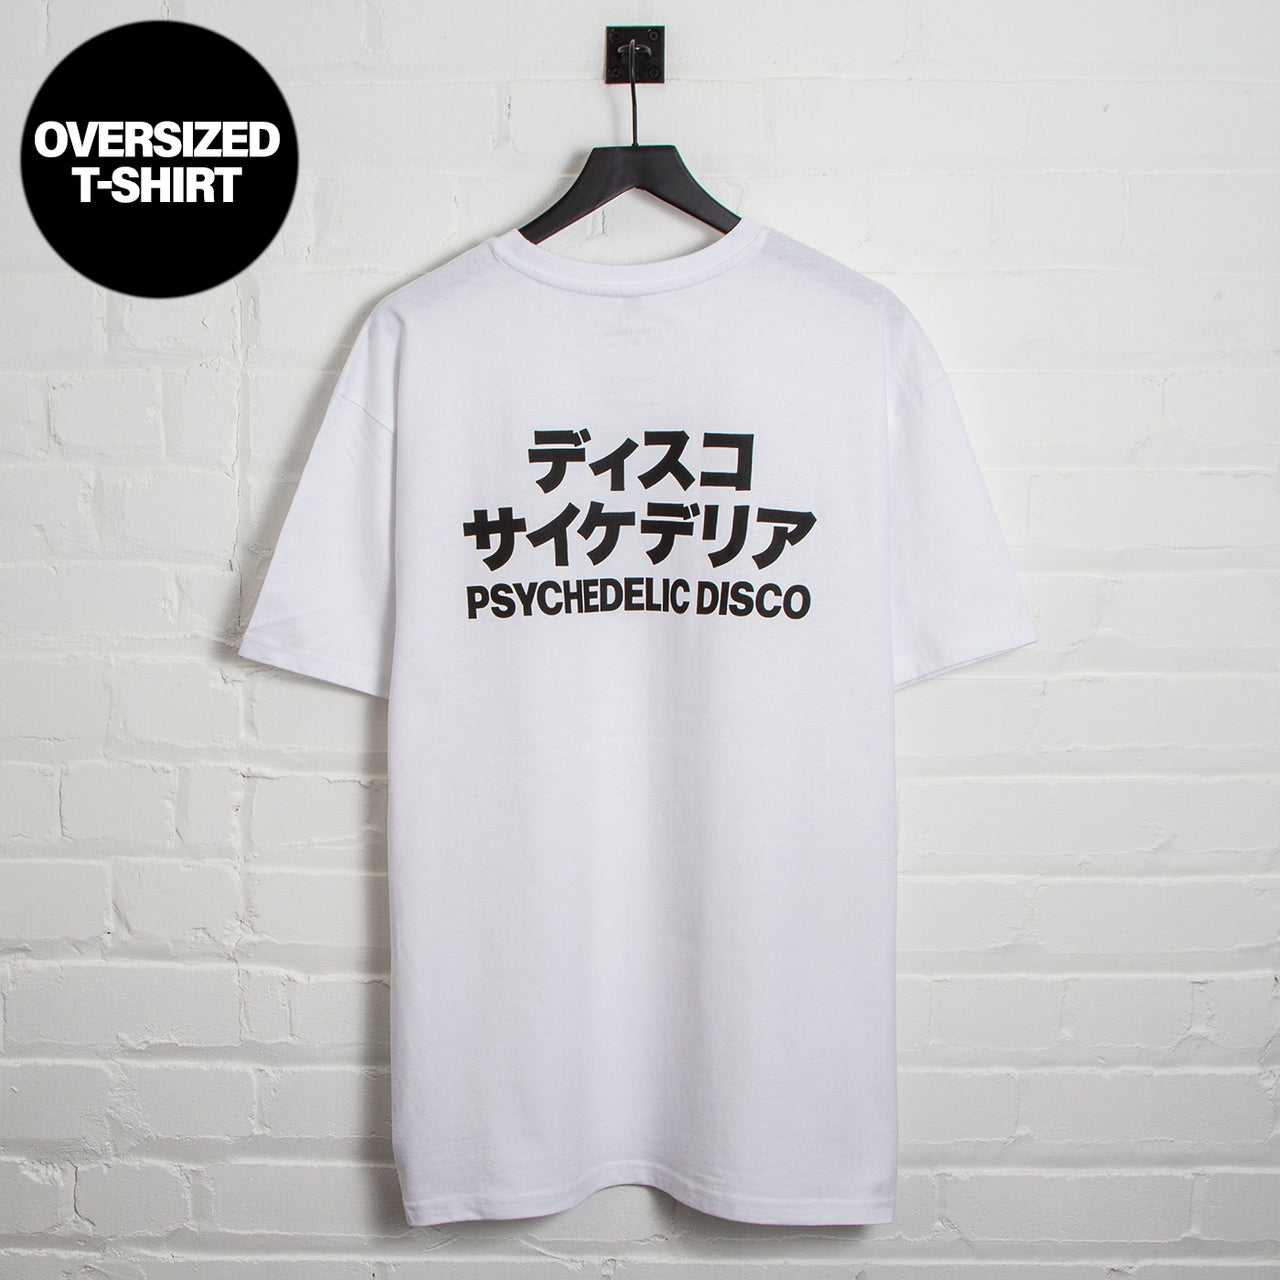 PD Reg Psychedelic Disco Back Print - Oversized Tshirt - White